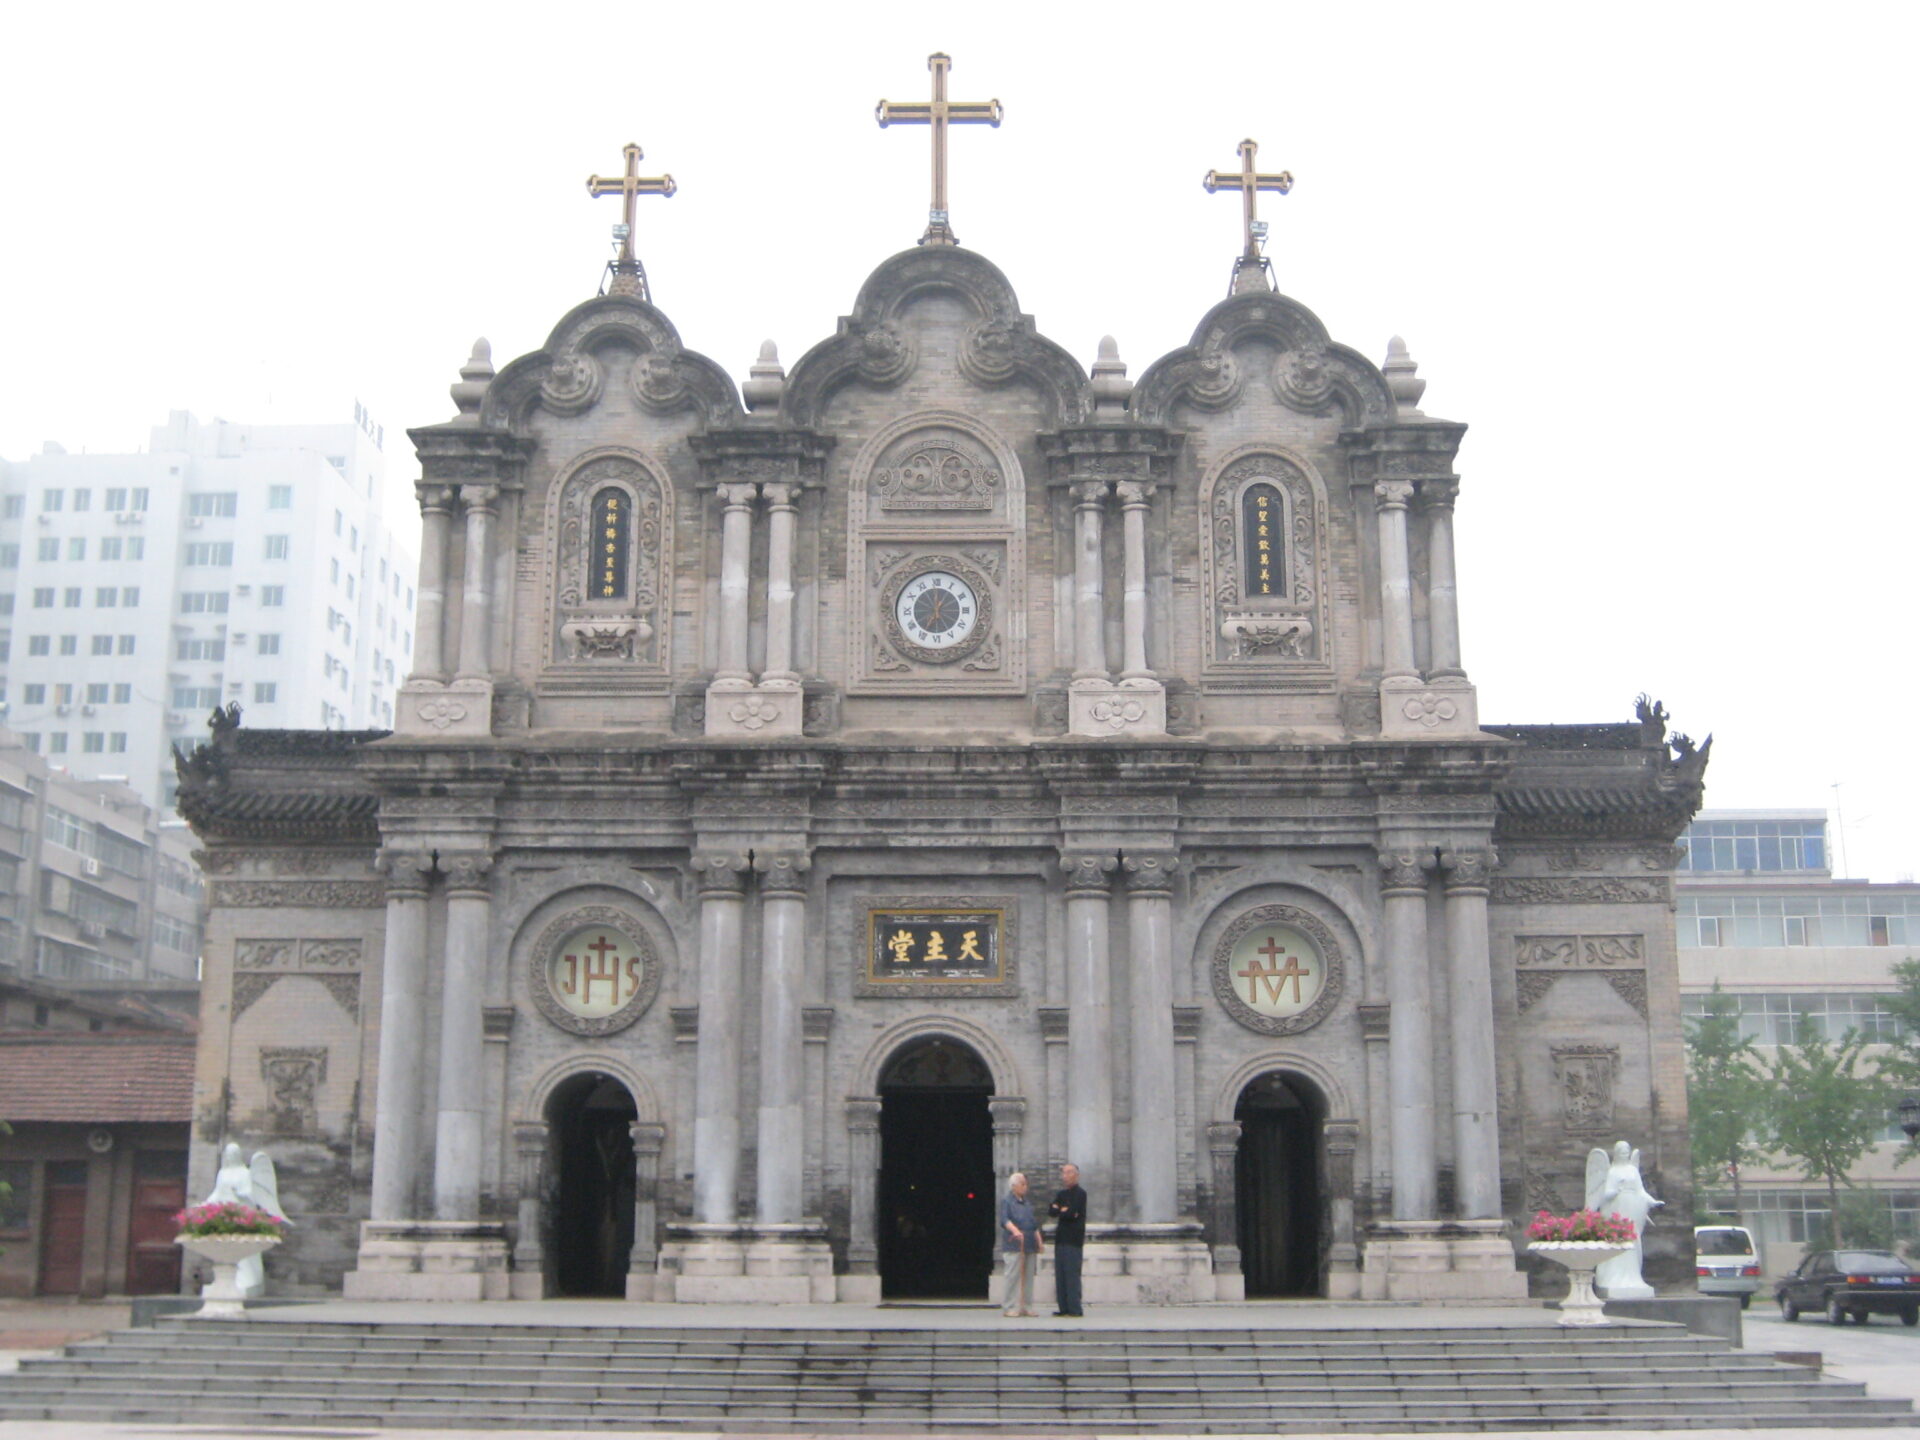 La cathédrale St-François de Xi'An, en Chine | Wikimedia commons CC-BY-SA-2.0